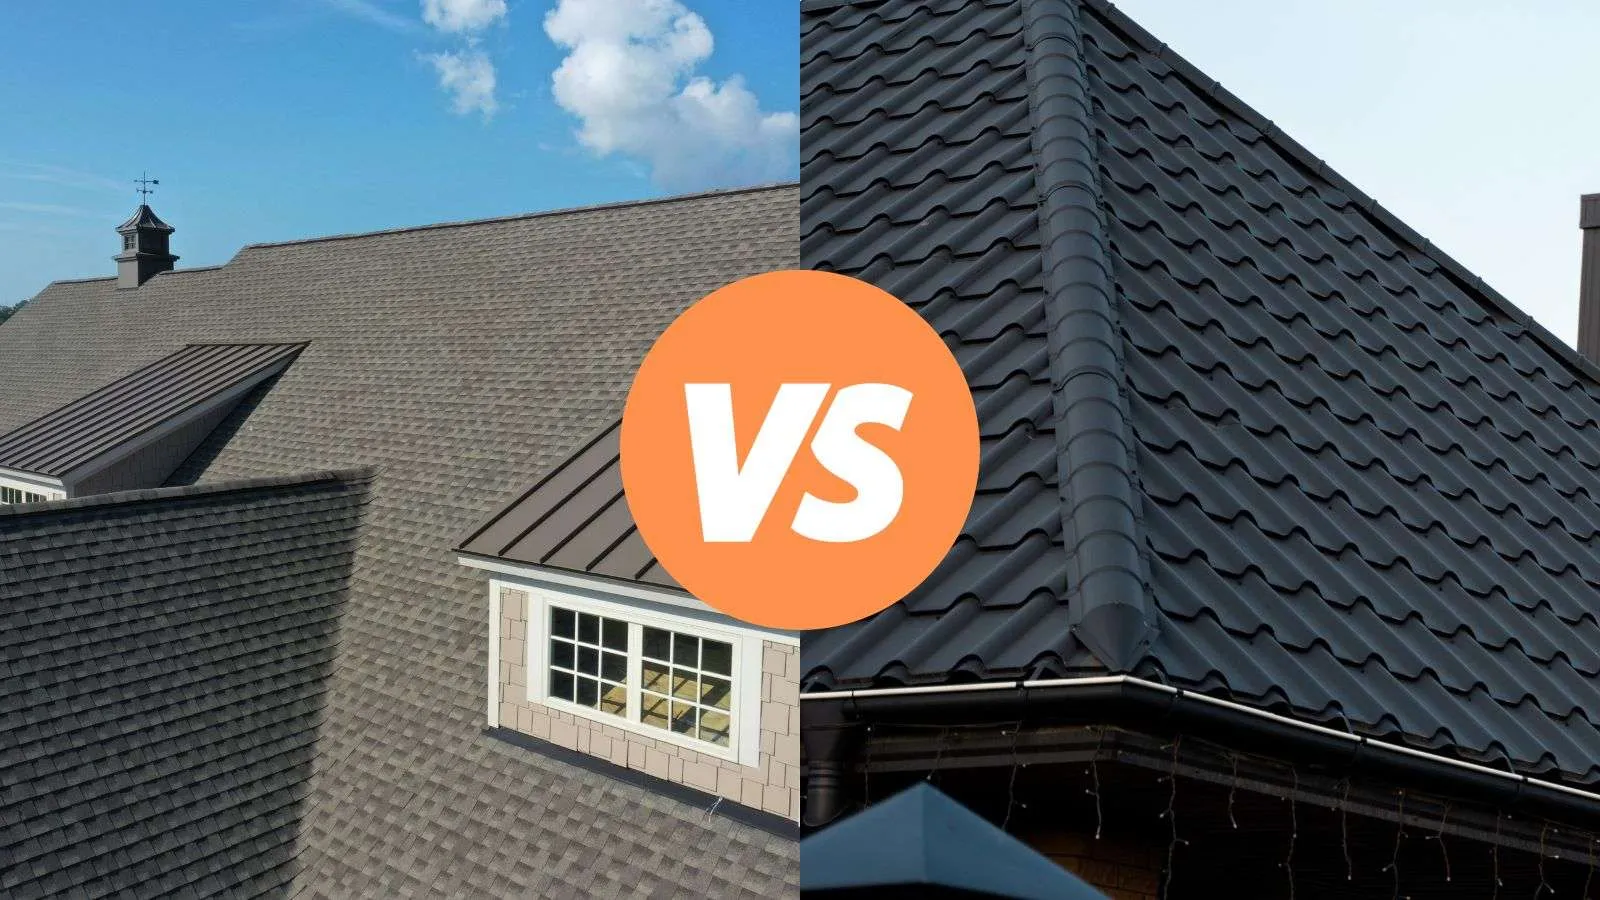 rural roof lifespans vs urban roof lifespans - bighomeprojects.com